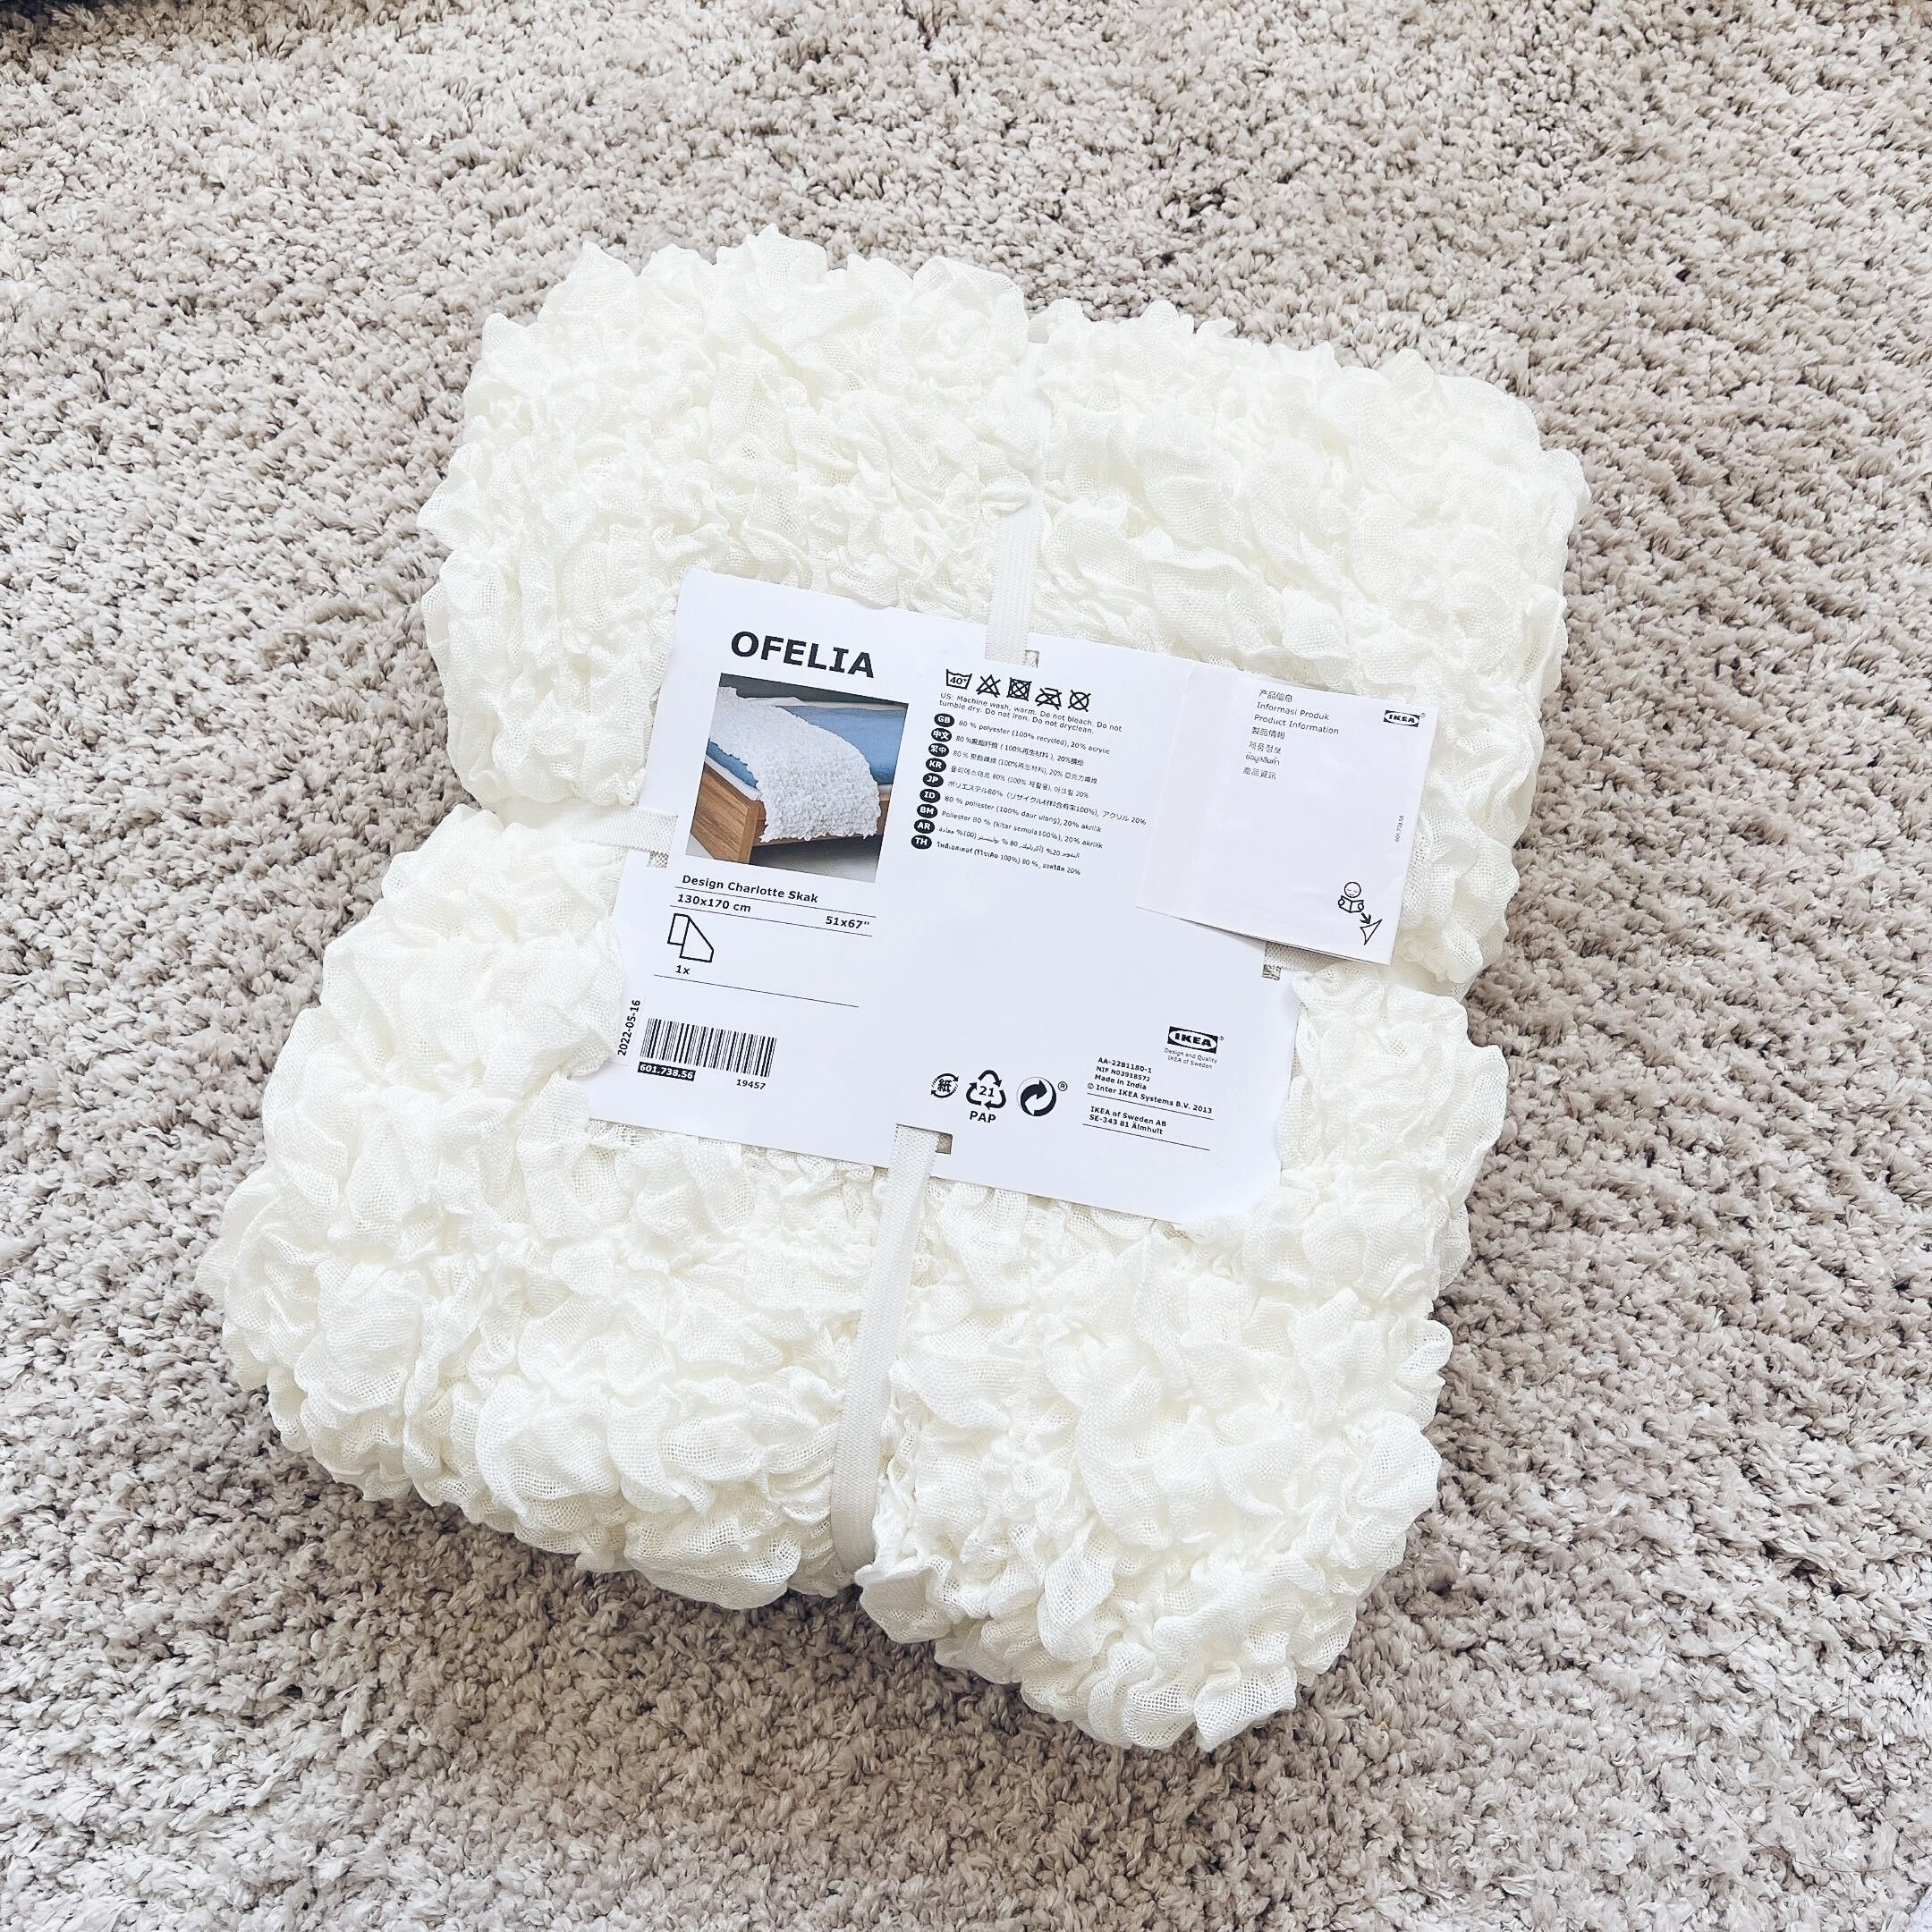 IKEA（イケア）のオススメの毛布「OFELIA オフェーリア 毛布, ホワイト」